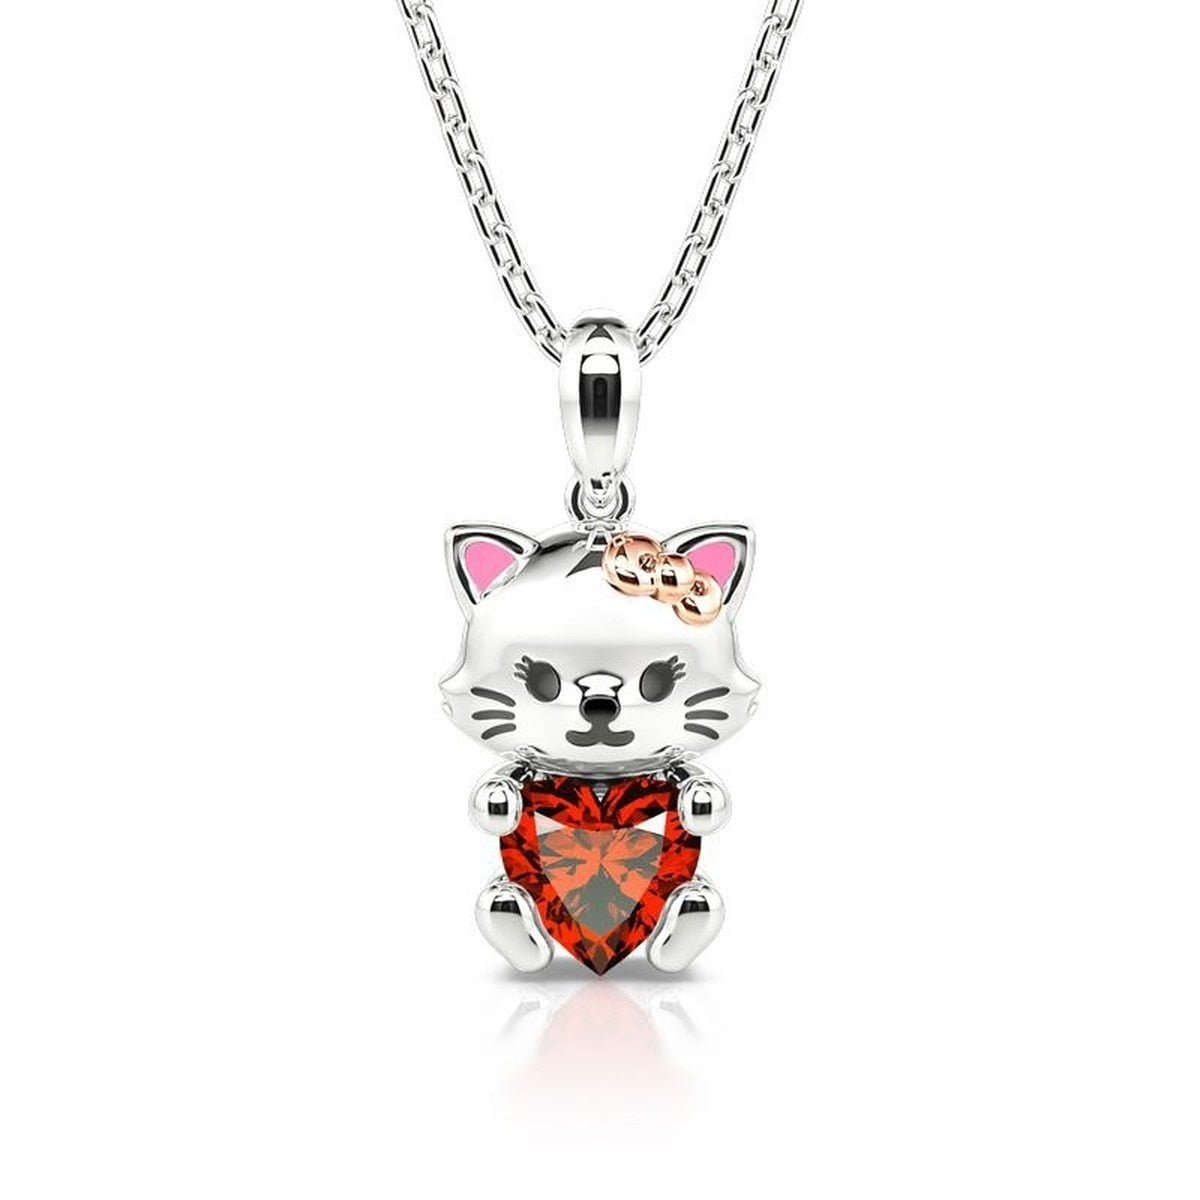 Kate Spade Cat Necklace - Cat necklace